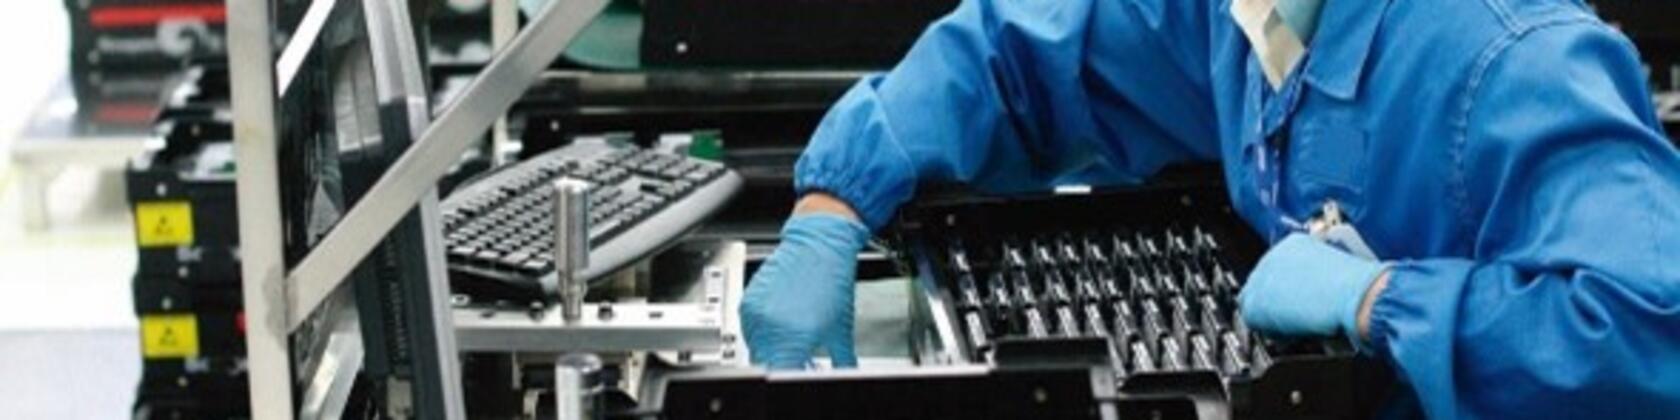 Productie ICT-materiaal toetsenbord in computerfabriek